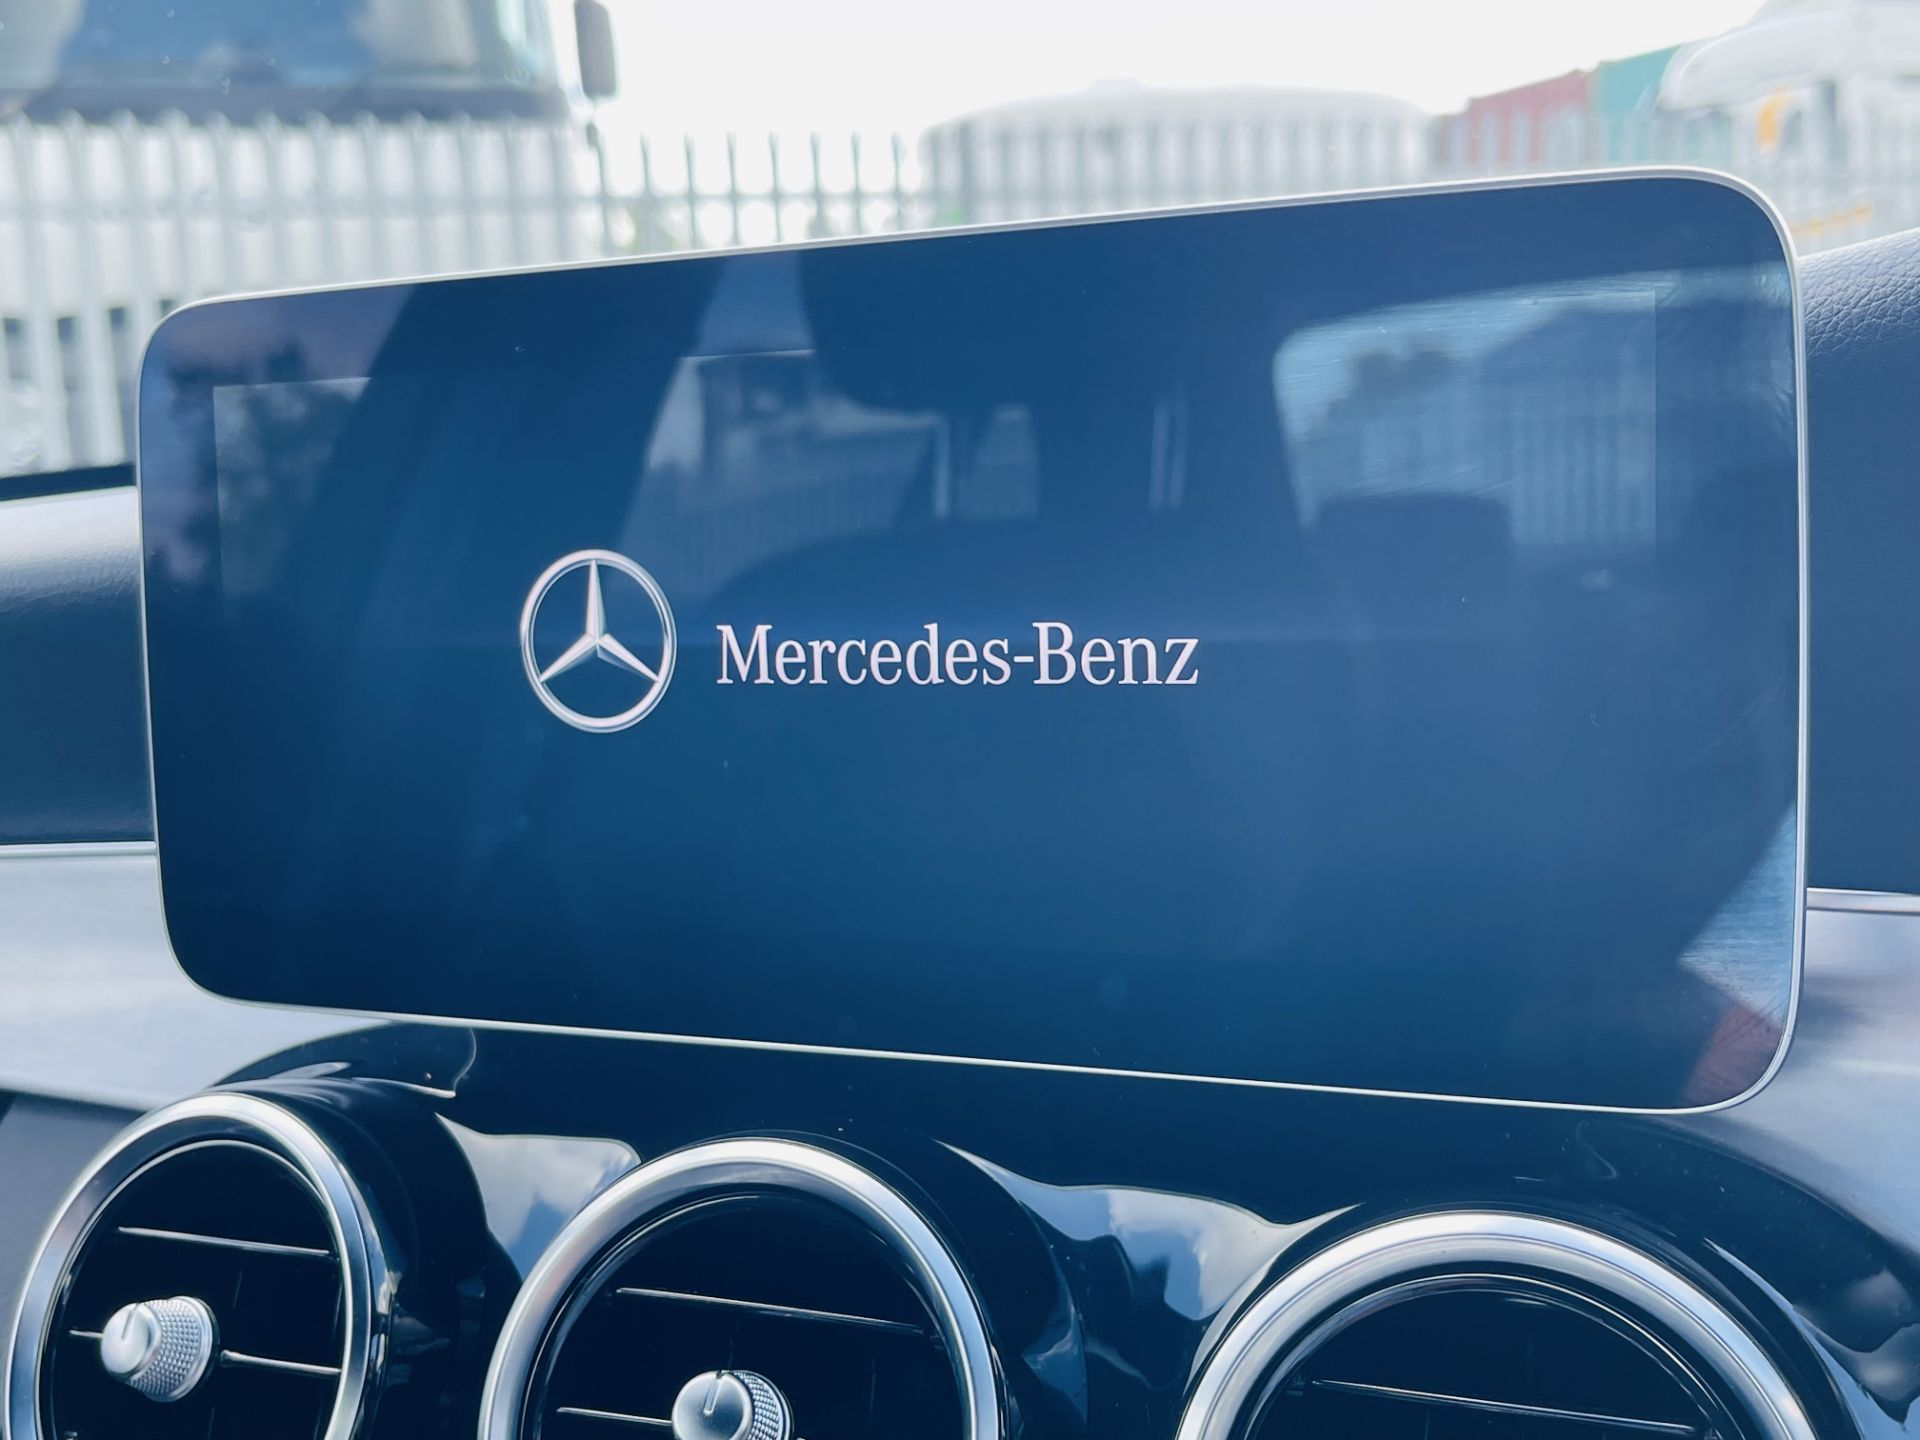 Mercedes Benz C220 AMG Line 9G-Tronic Auto 2019 ‘69 Reg’ - Sat Nav - A/C - Euro 6 - ULEZ Compliant - Image 27 of 30